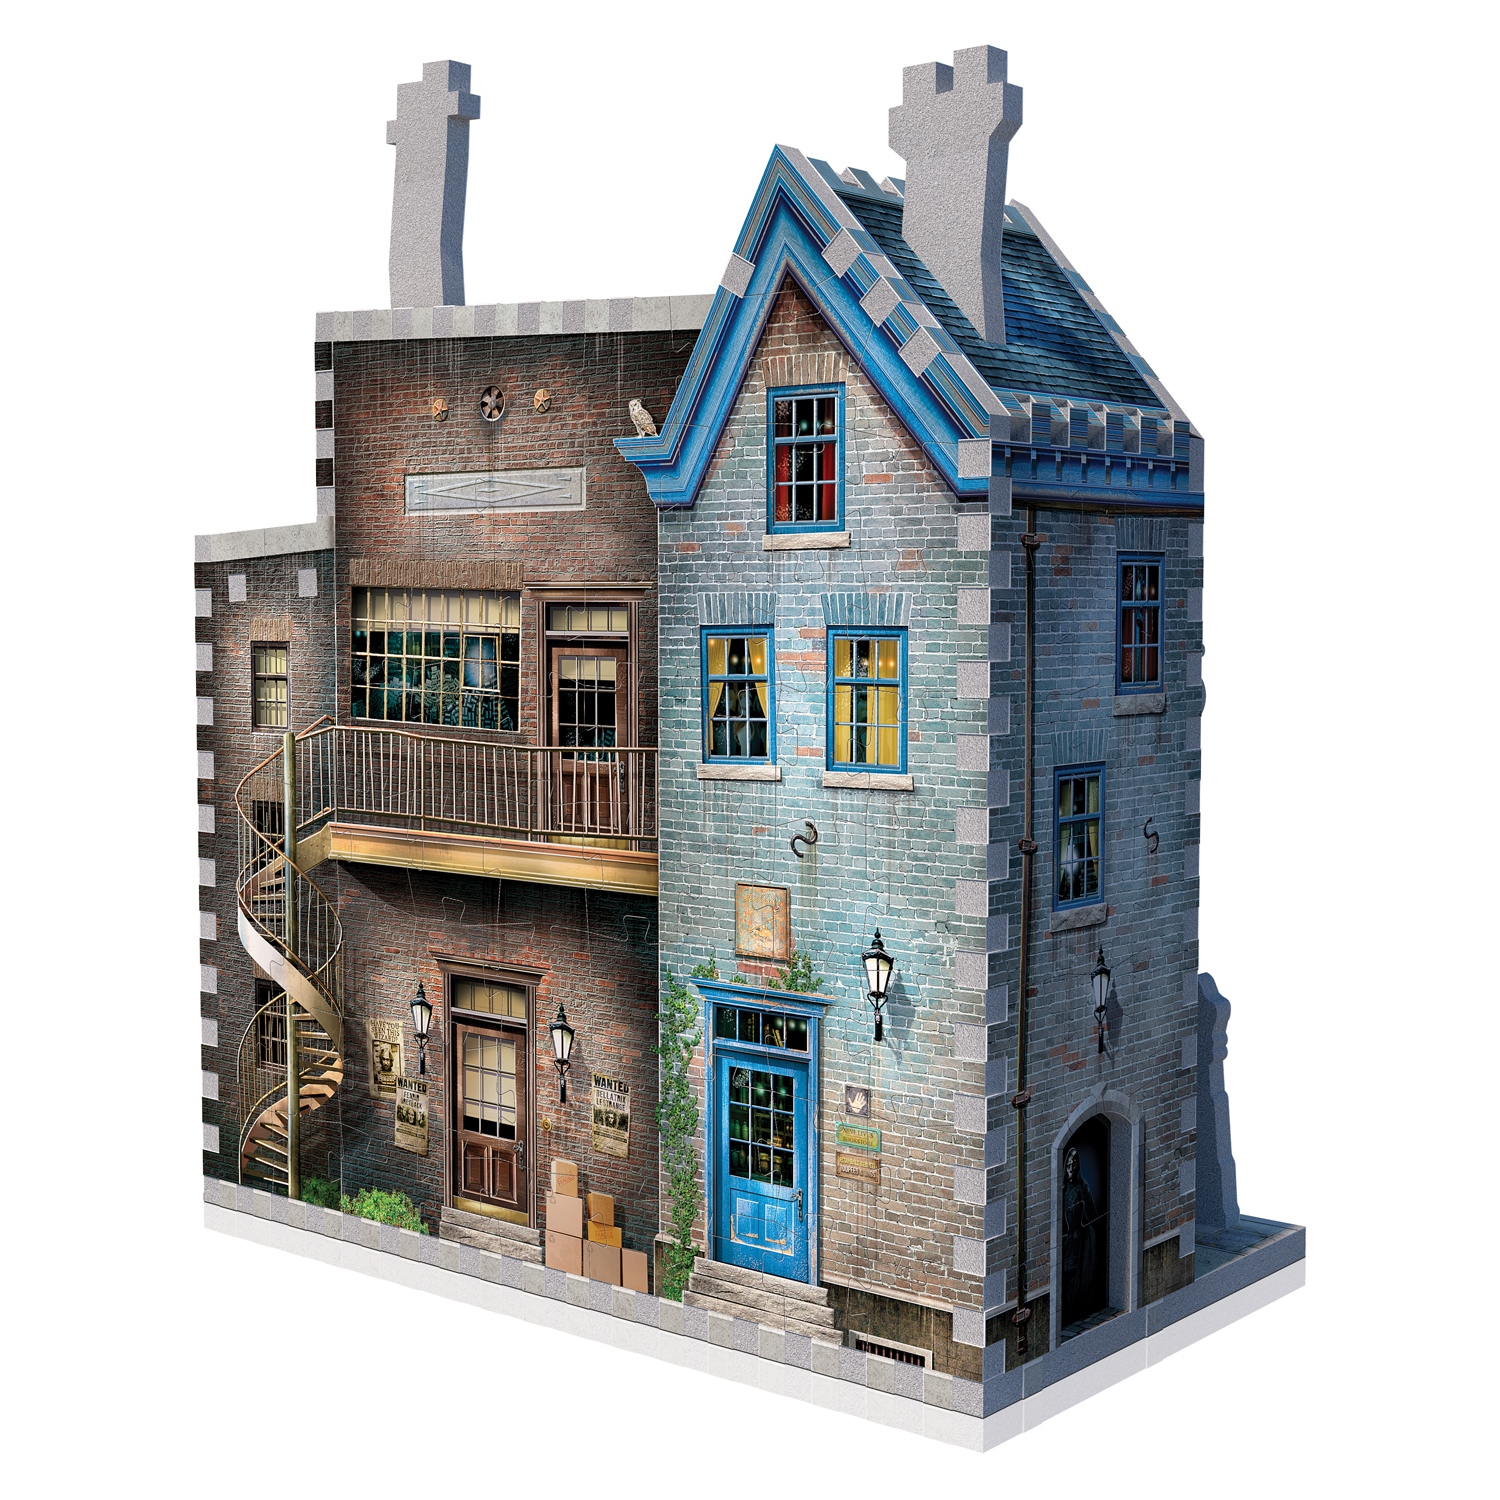 Details about   Harry Potter Collectibles Gift 3D Puzzle Ollivanders Magic Wand Shop 295 Pieces 